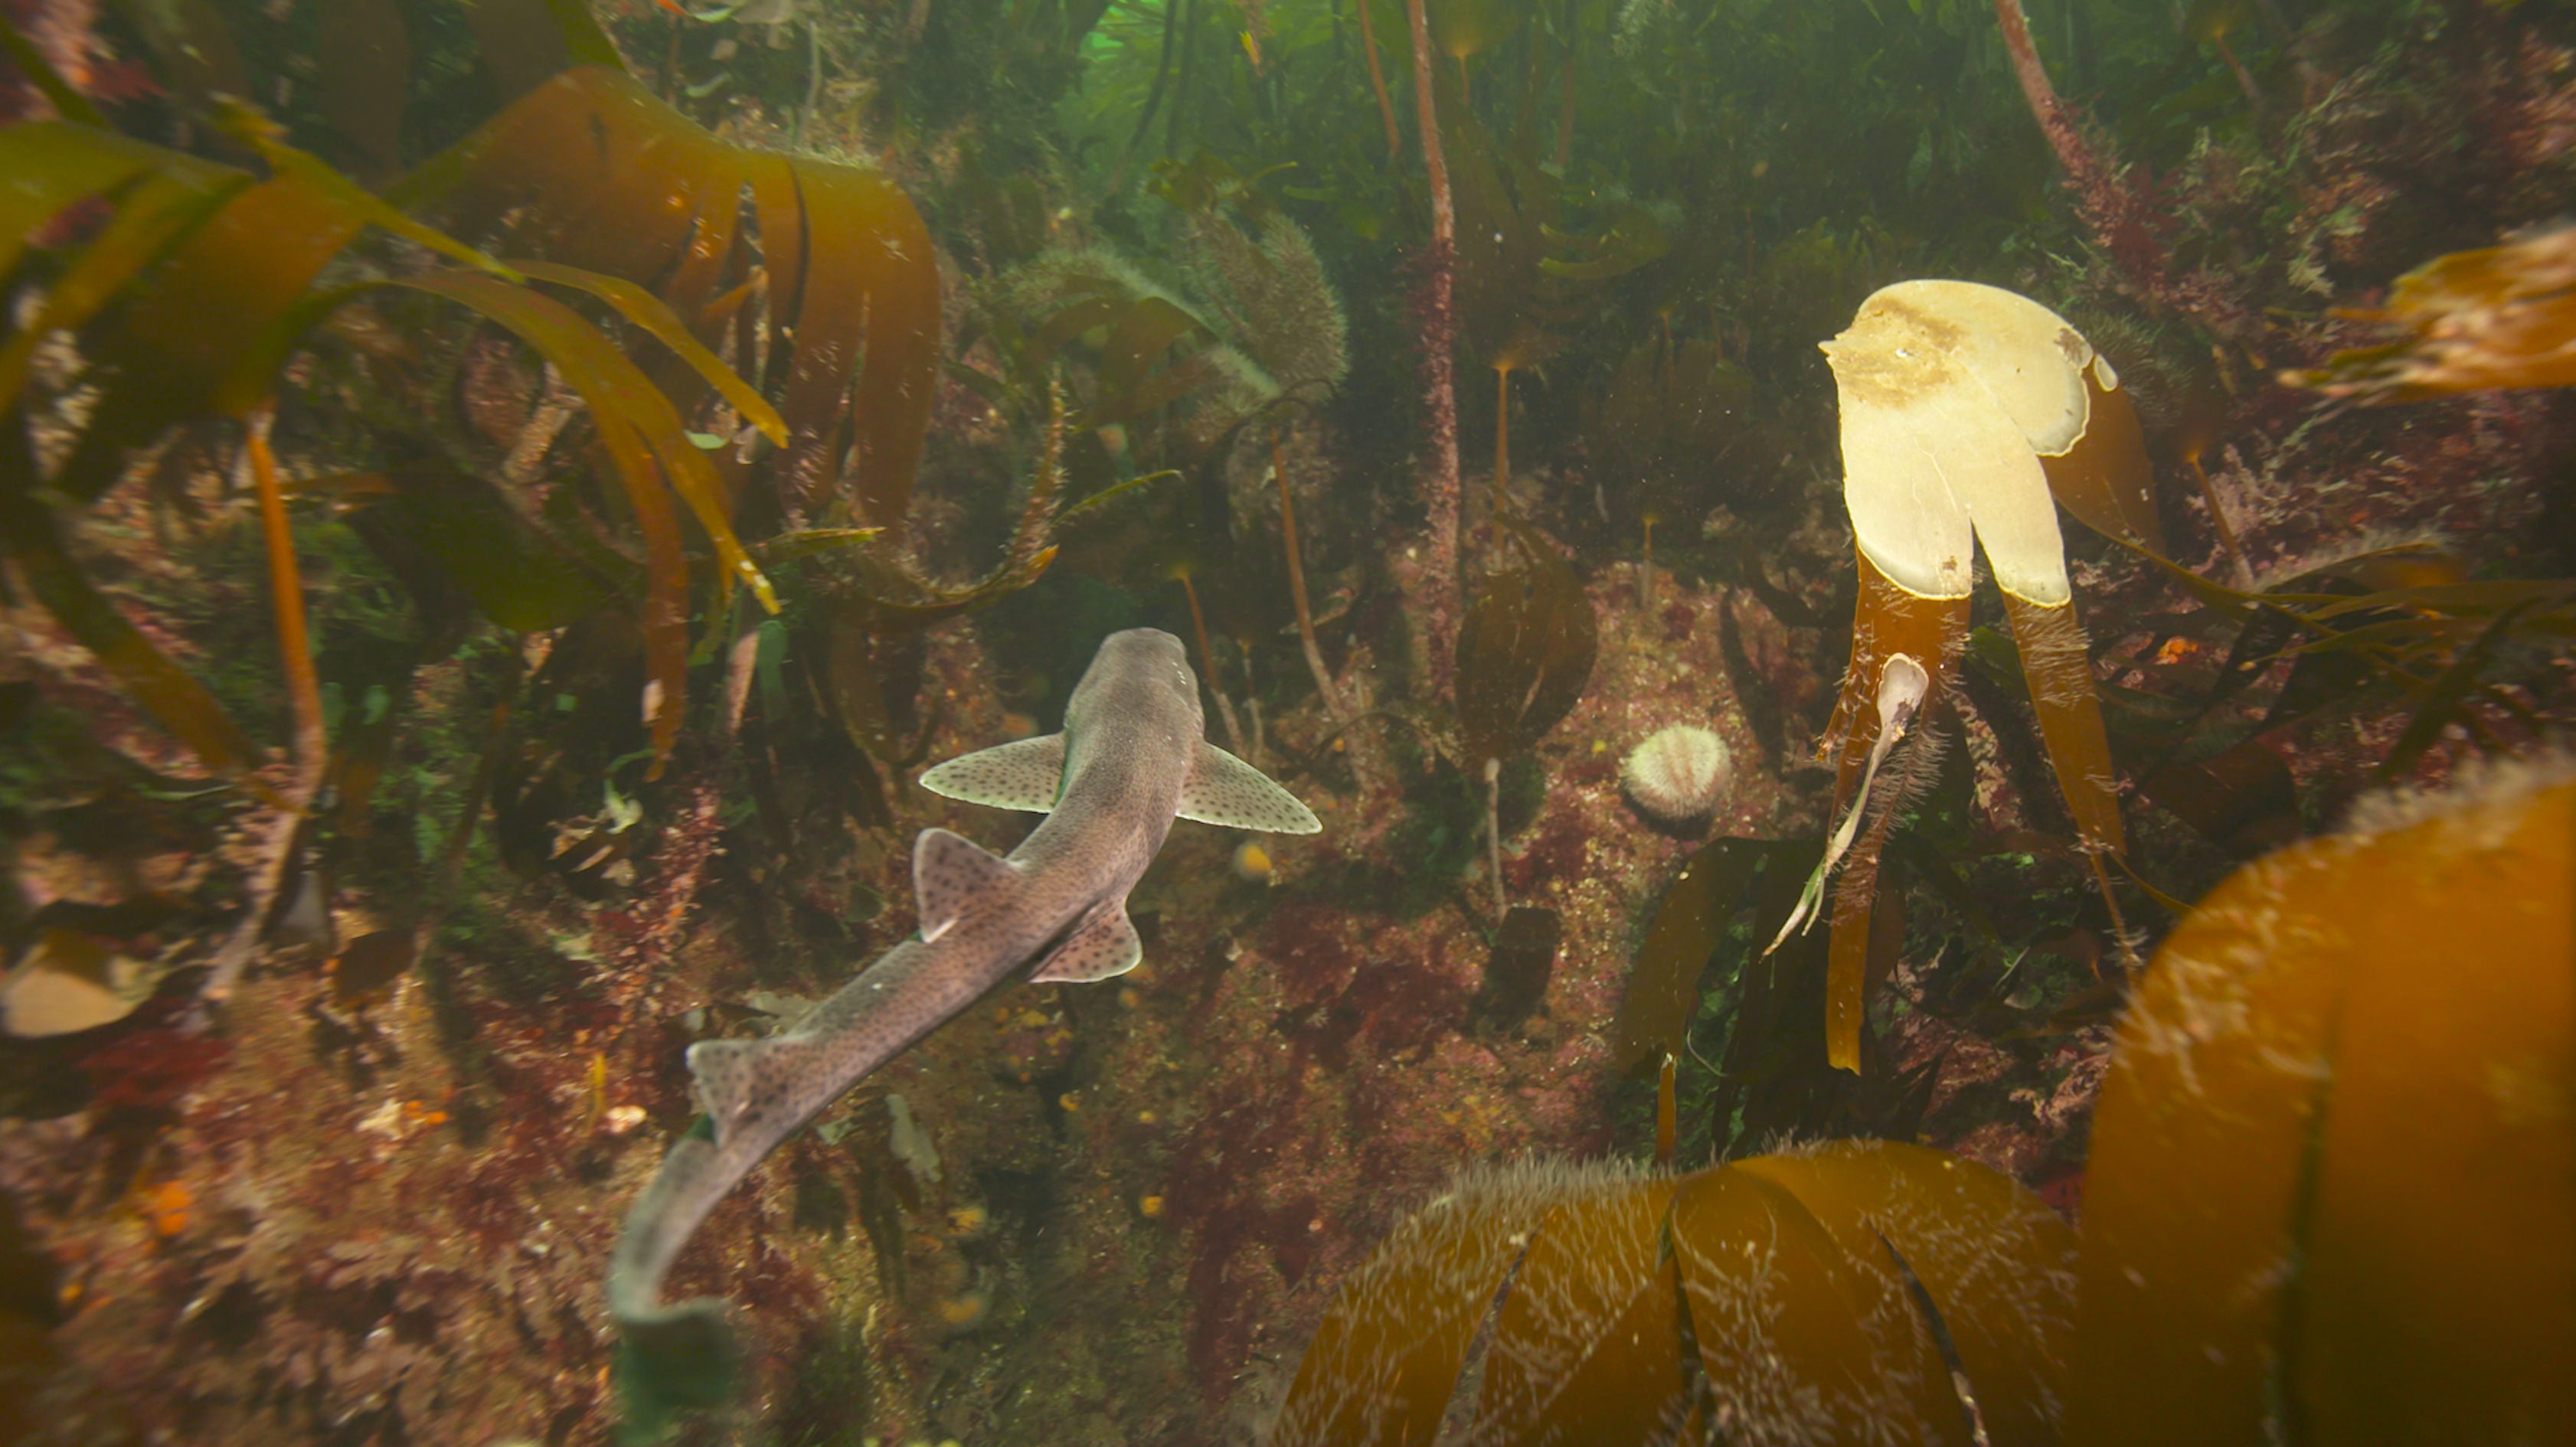 A catshark swims through kelp off the Sussex coast